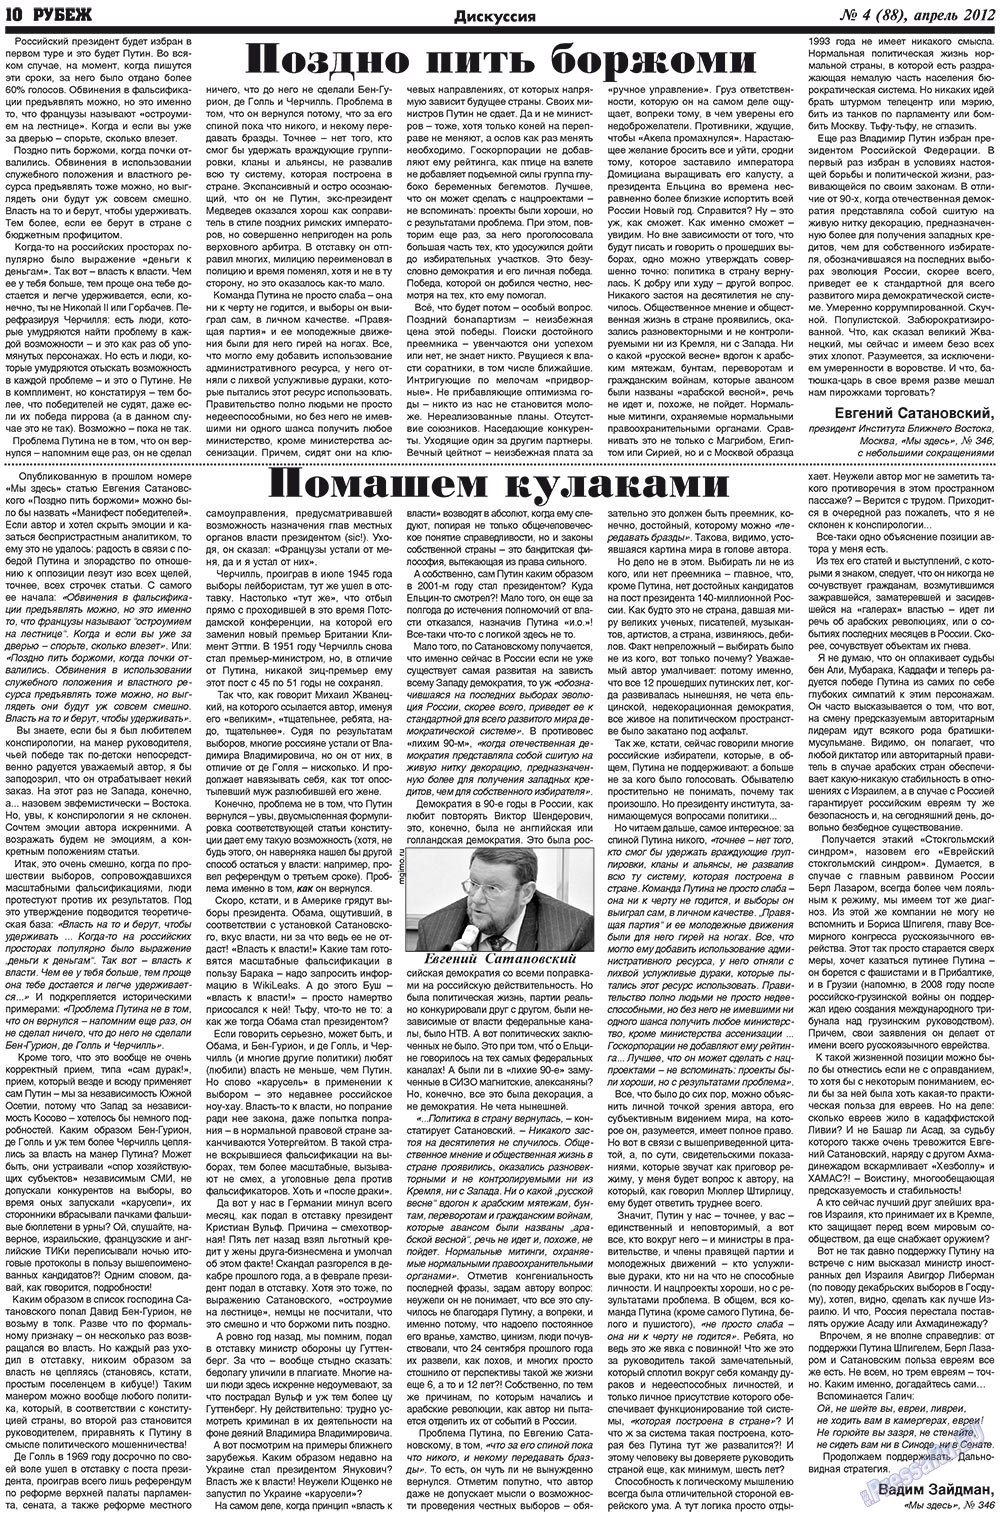 Рубеж, газета. 2012 №4 стр.10